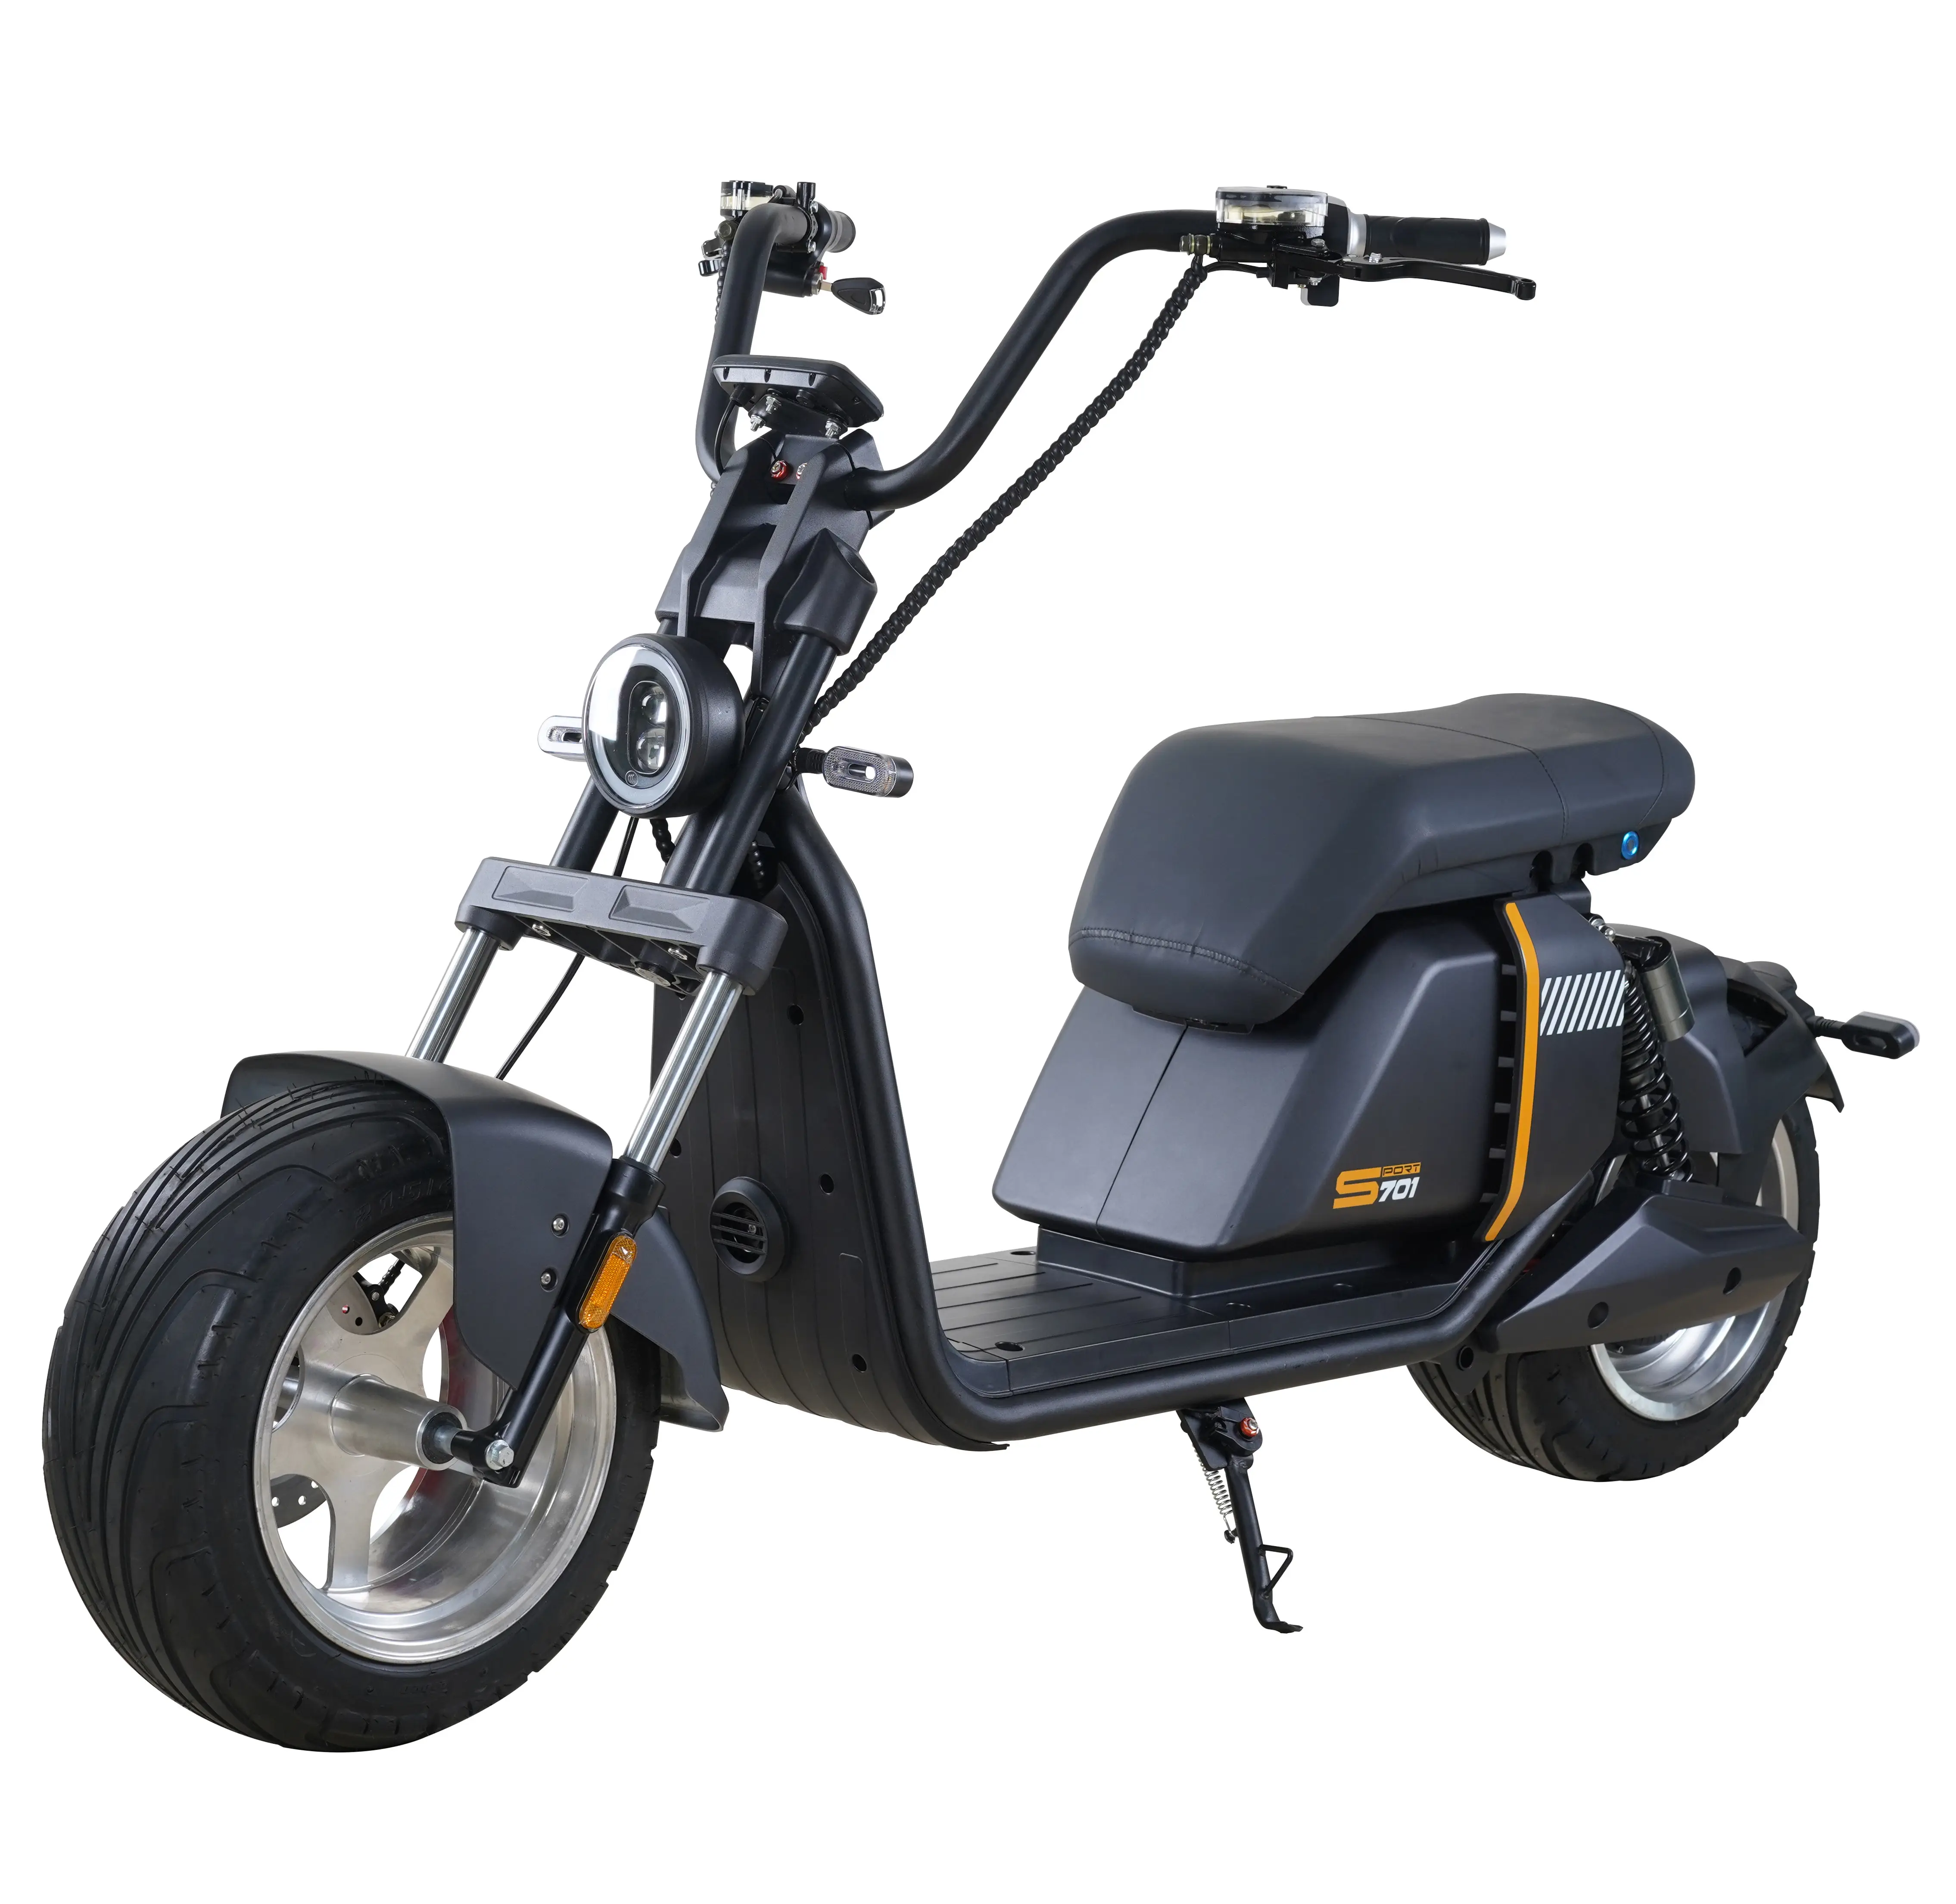 Magazzino europeo Stock 2000/3000w scooter elettrici City Coco vendita calda scooter elettrici citycoco per adulti